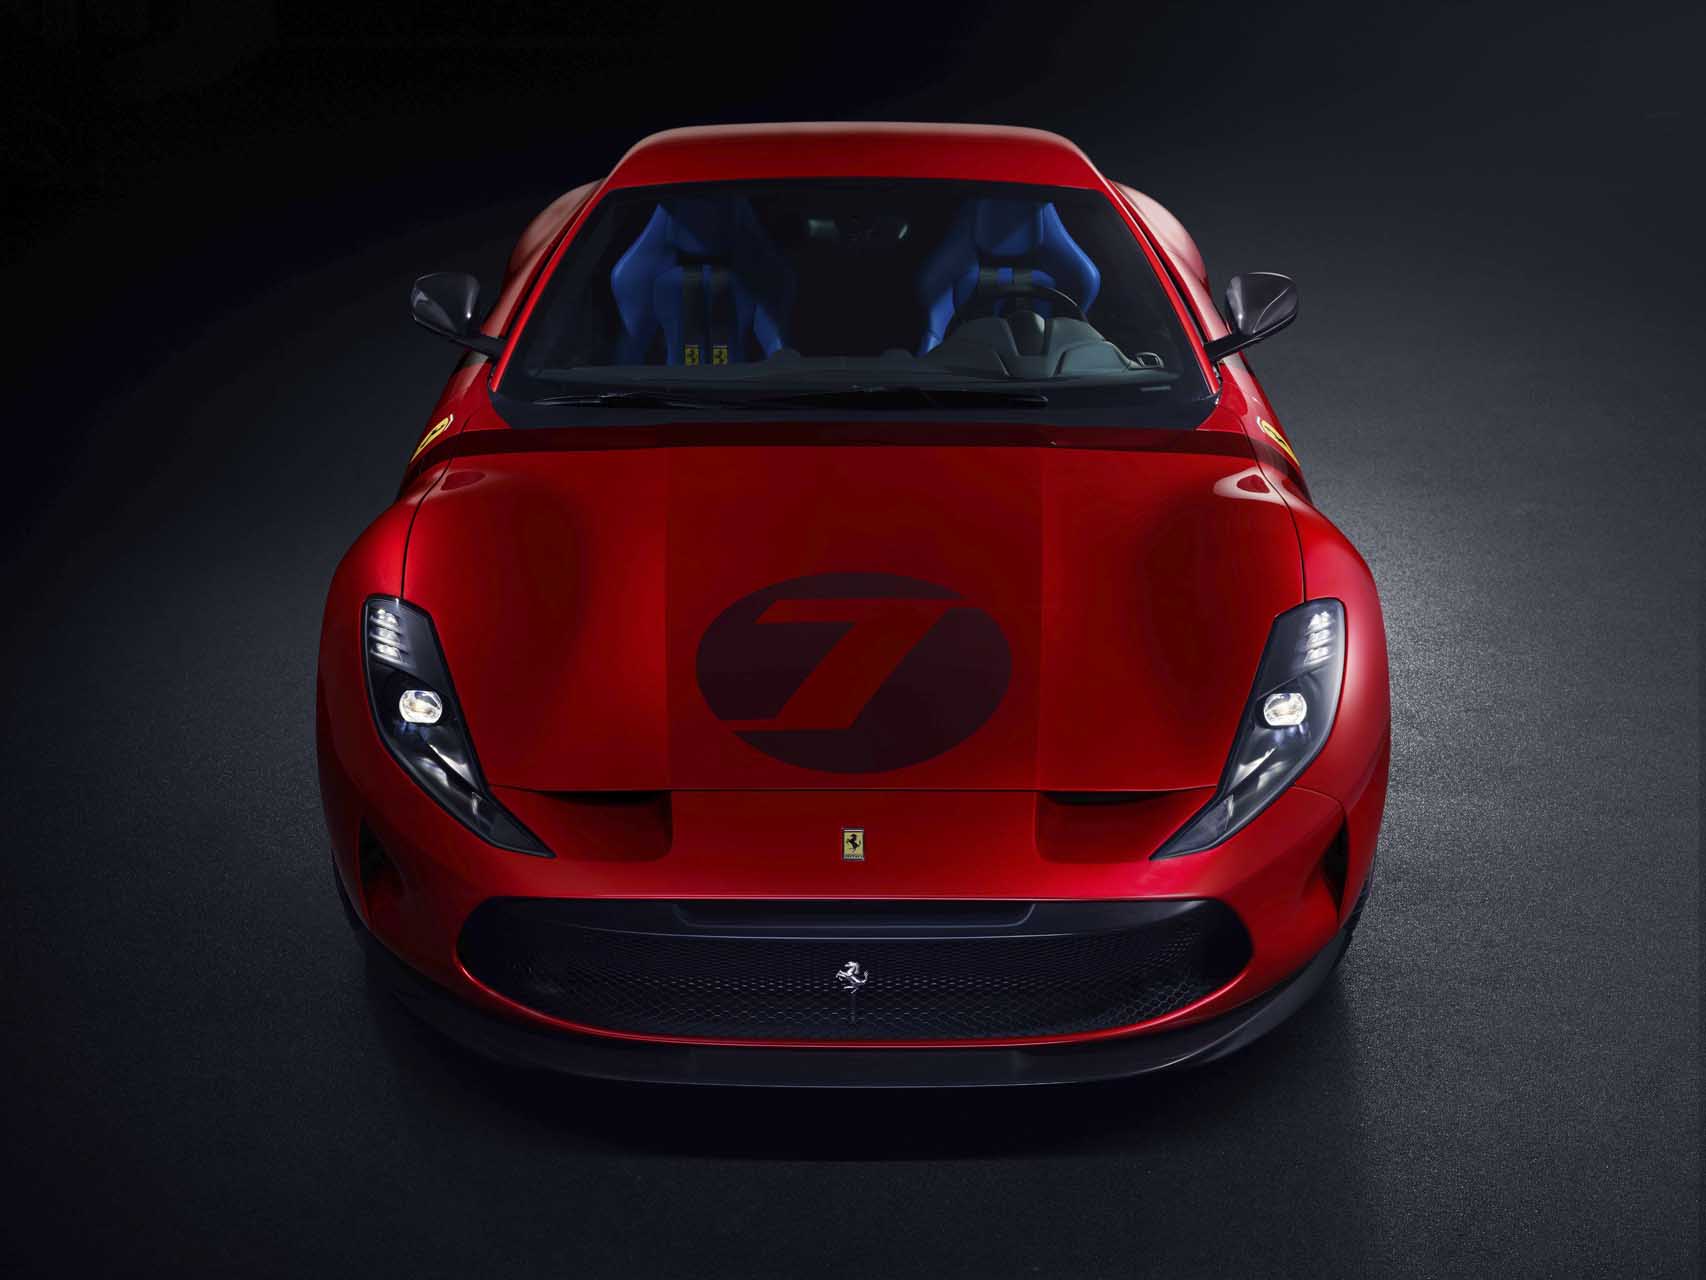 Siêu xe Ferrari LaFerrari mui trần được rao bán 6,5 triệu euro